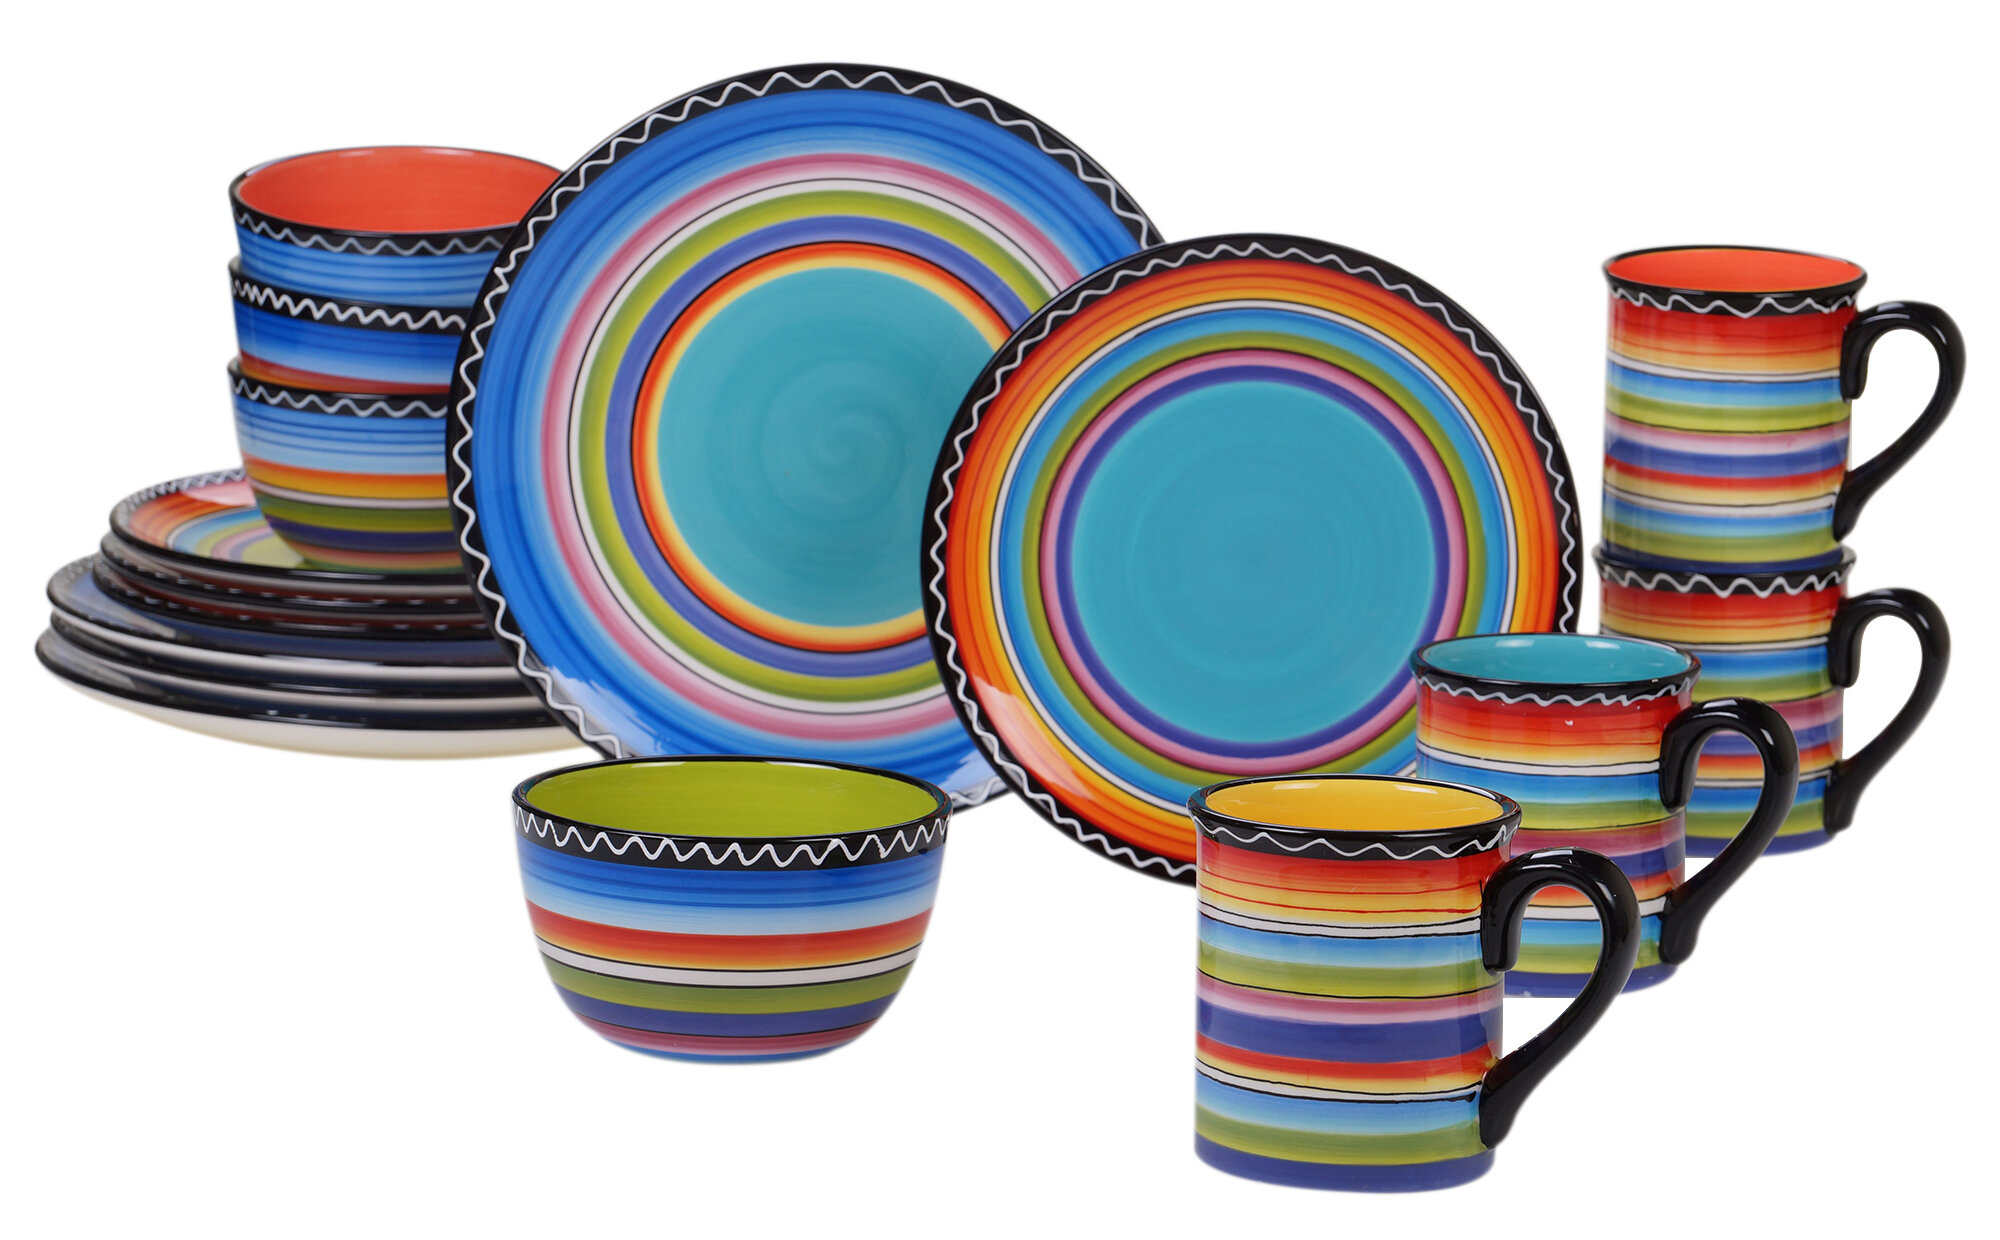 Set Dinnerware 16 Piece Dishes Plate Mug Dinner Service Southwest Fiesta Style